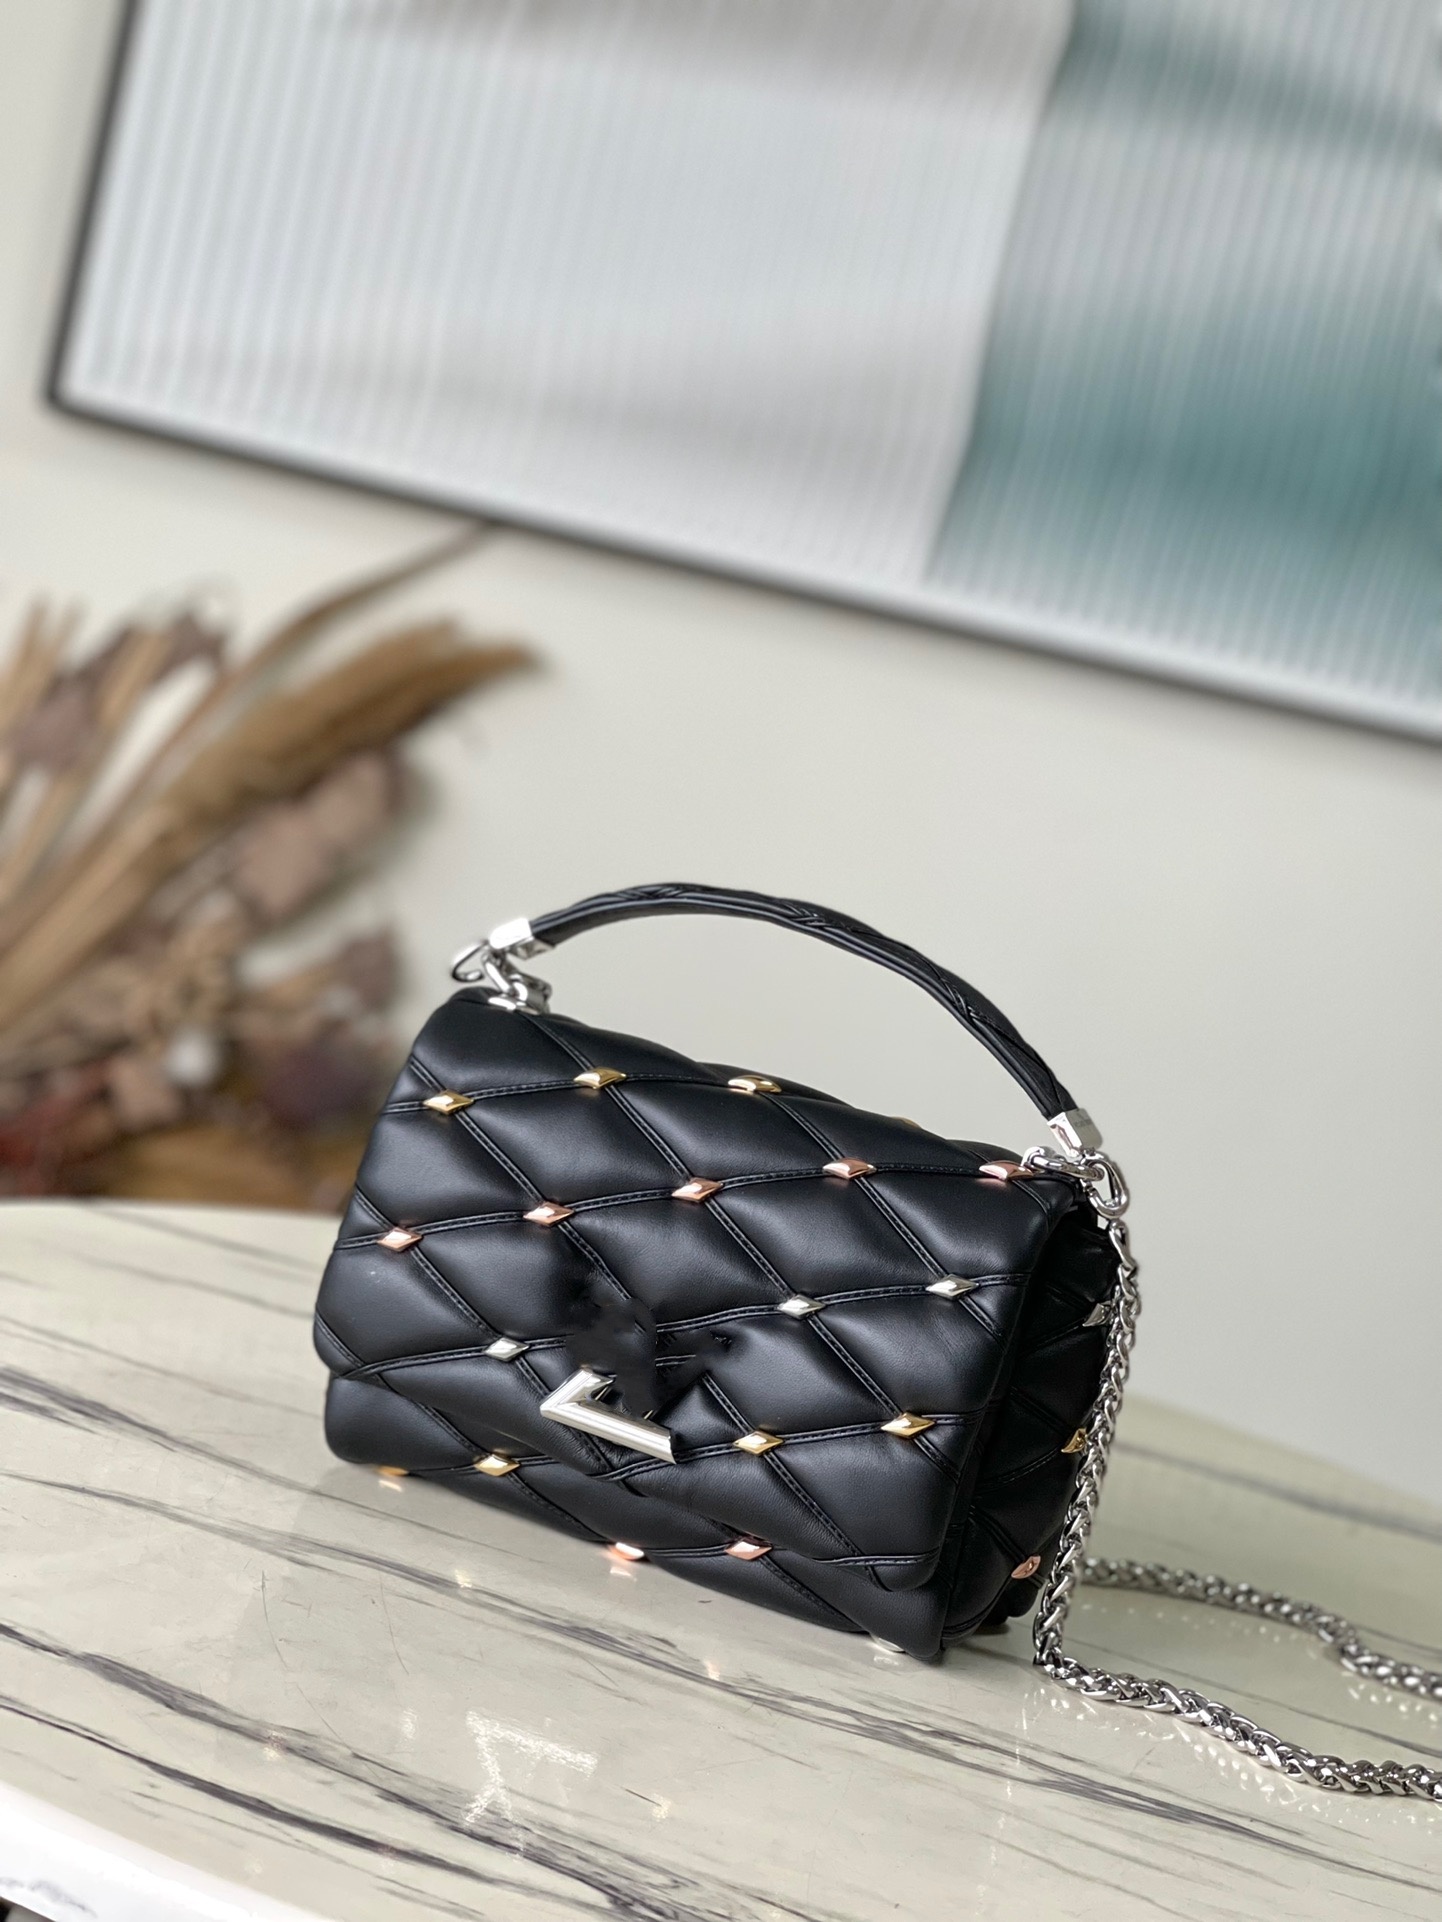 Top Fashion Hot New Women's Shoulder Bag Cowhide Car Line Metal embellishment Chain Crossbody Bag Handbag m24246 m24151